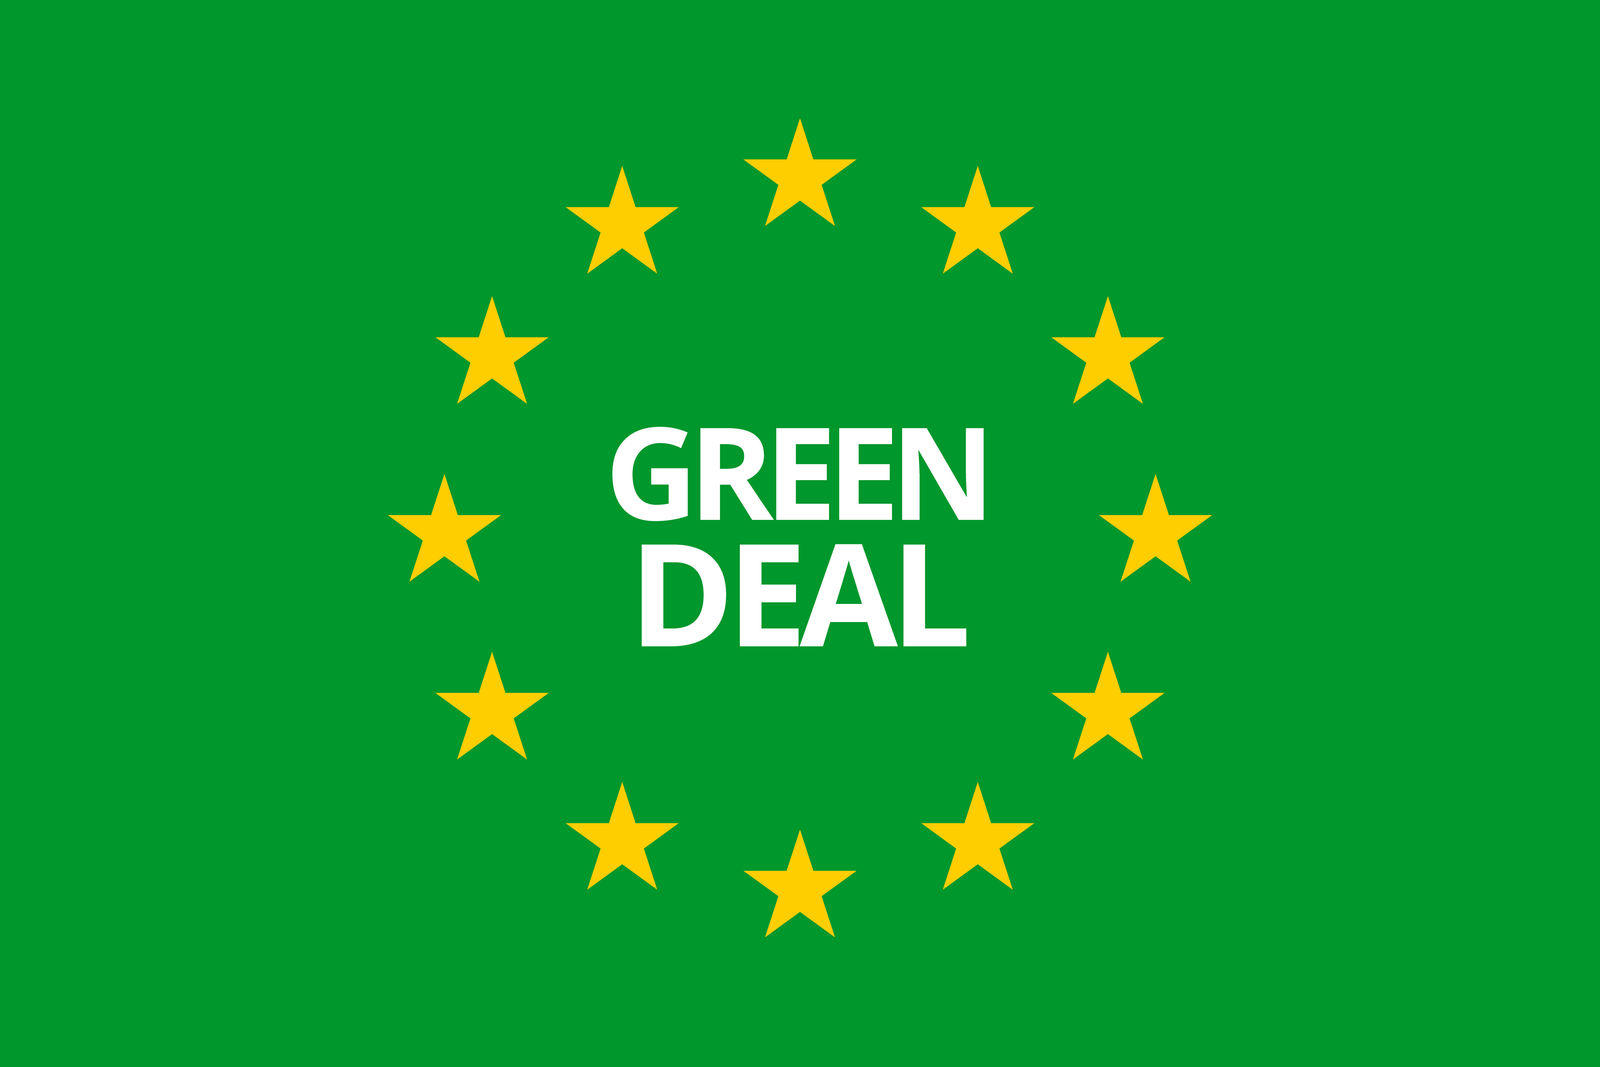 Green deal: CEO Initiative